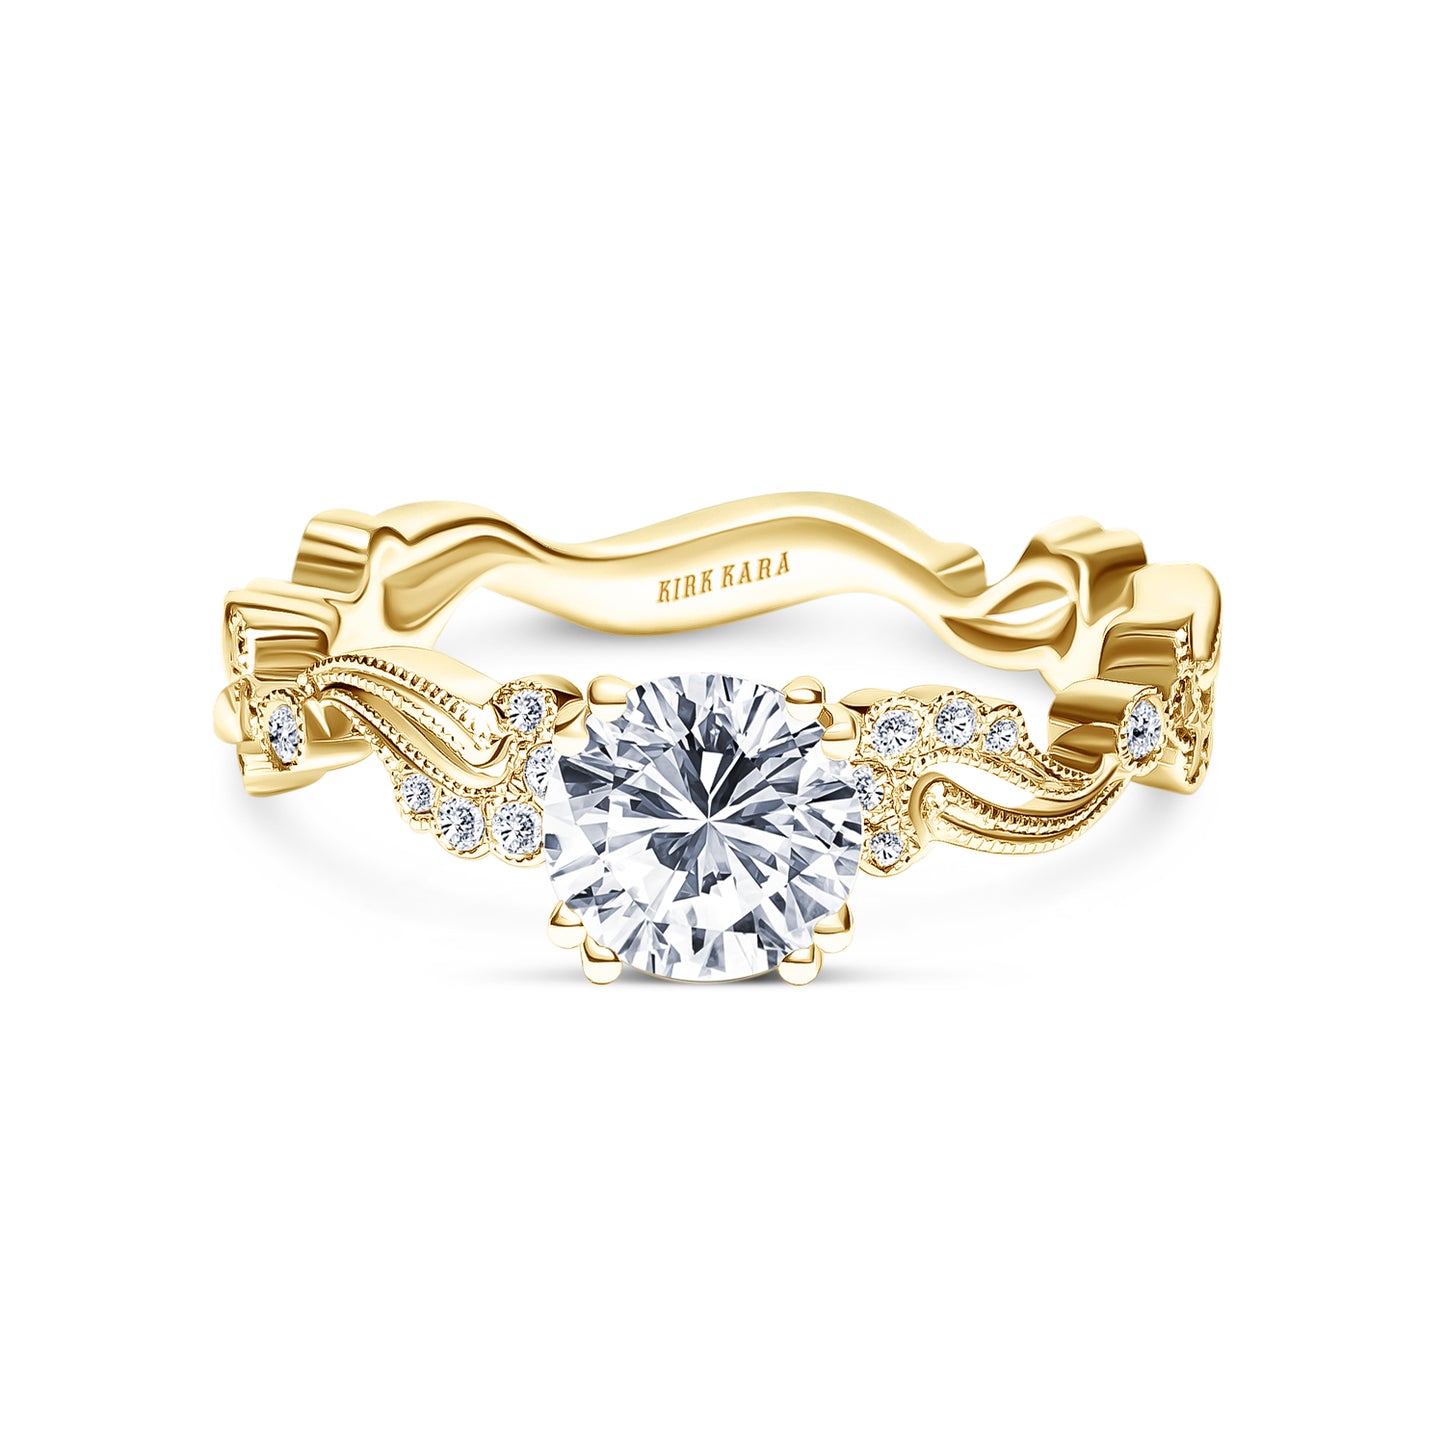 Vintage Inspired Paisley Diamond Engagement Ring